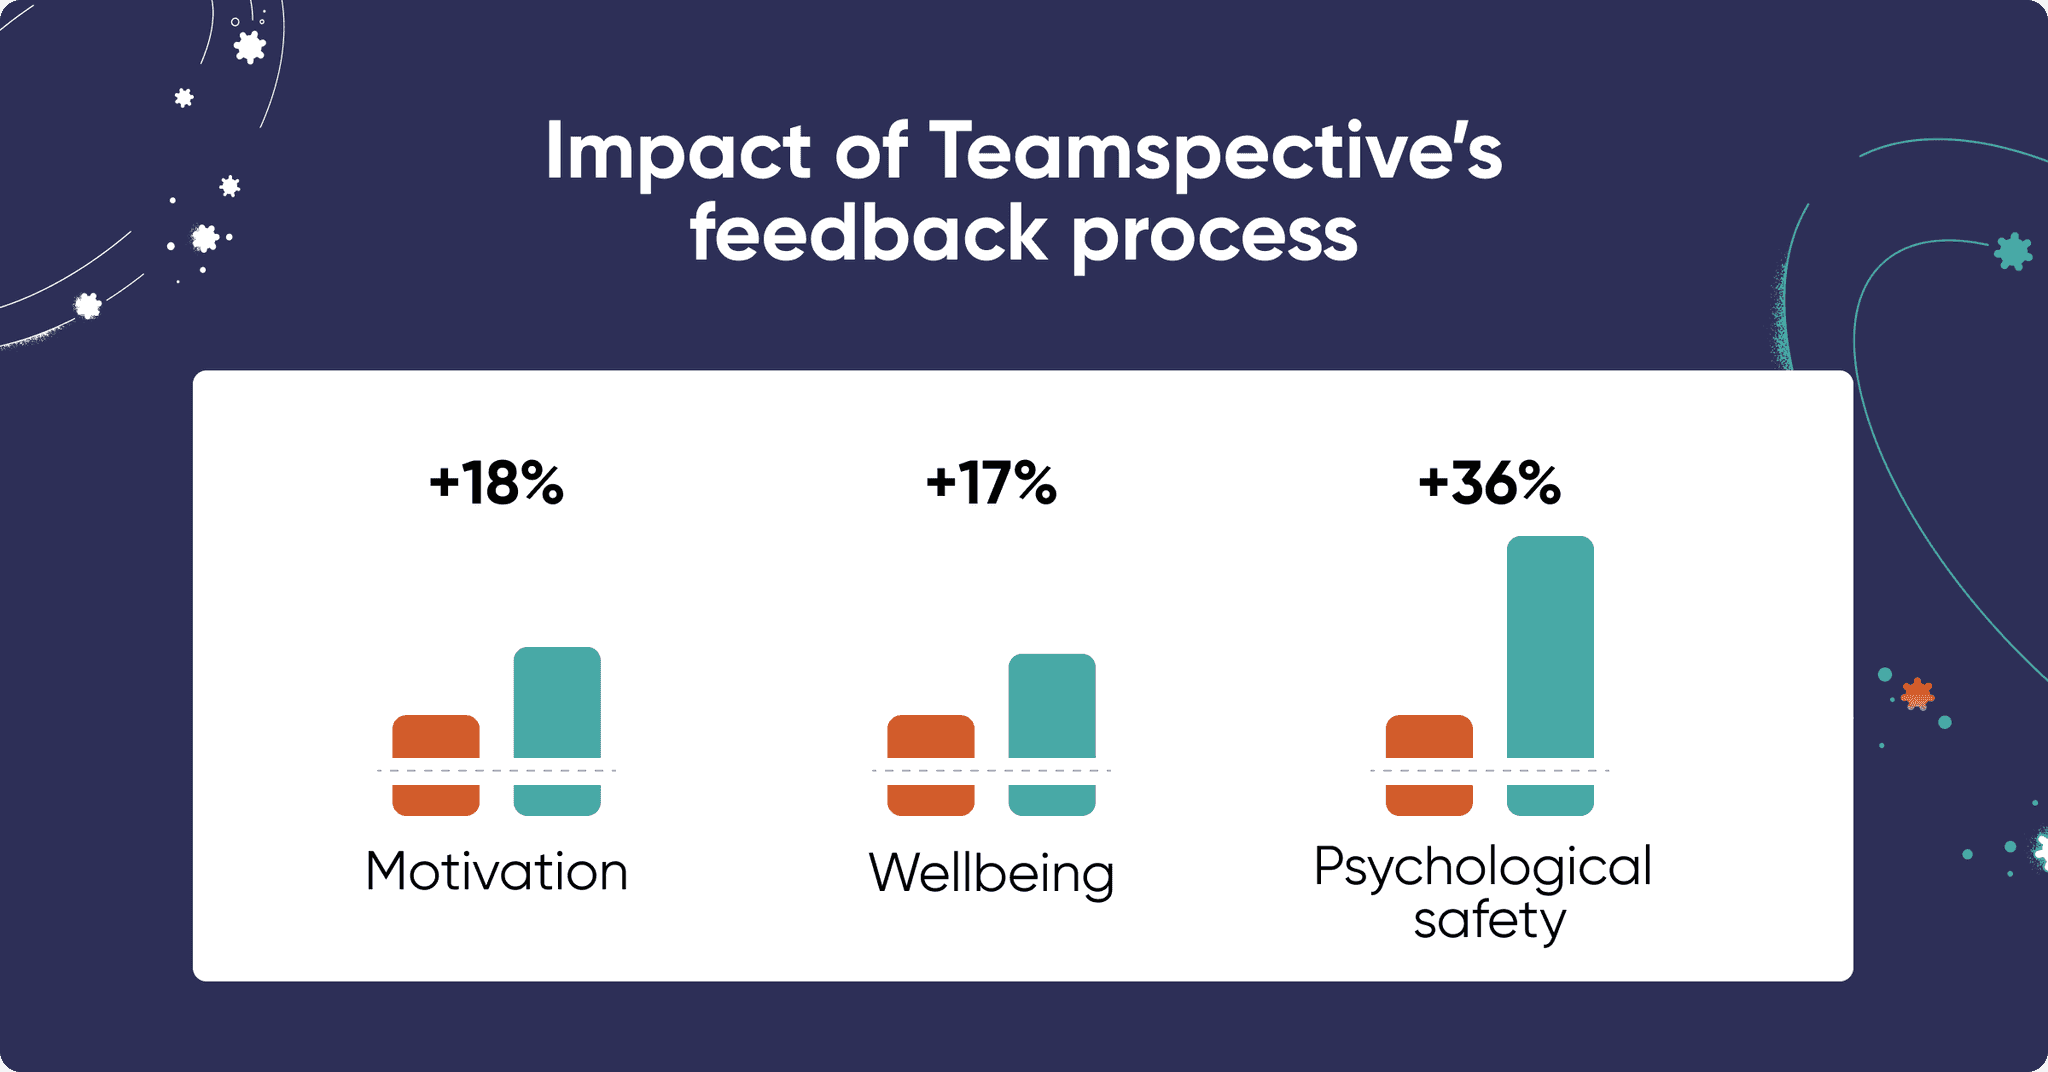 Impact of Teamspective's feedback processes